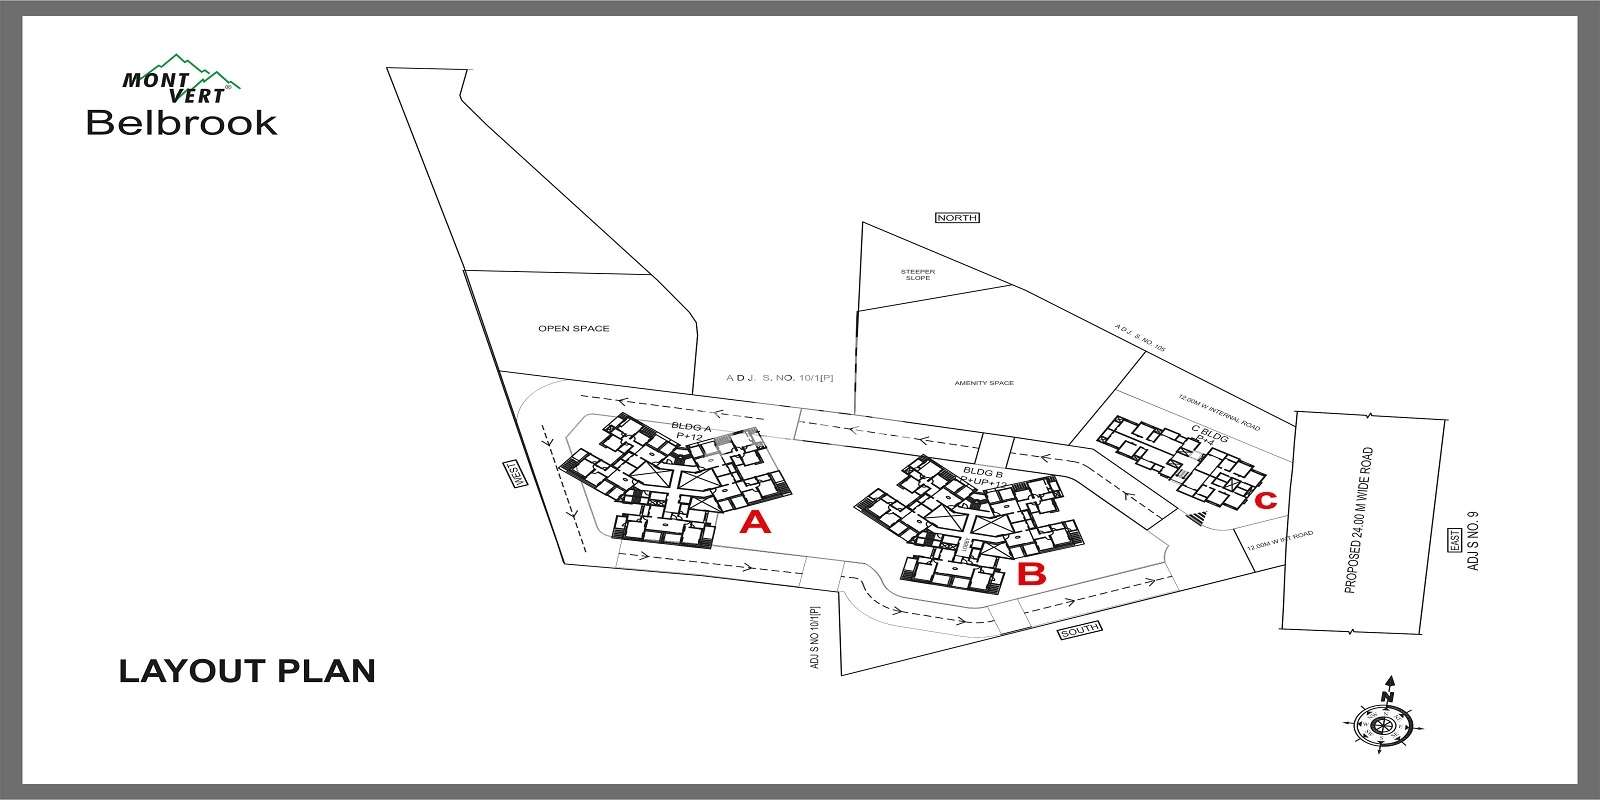 mont vert belbrook project master plan image1